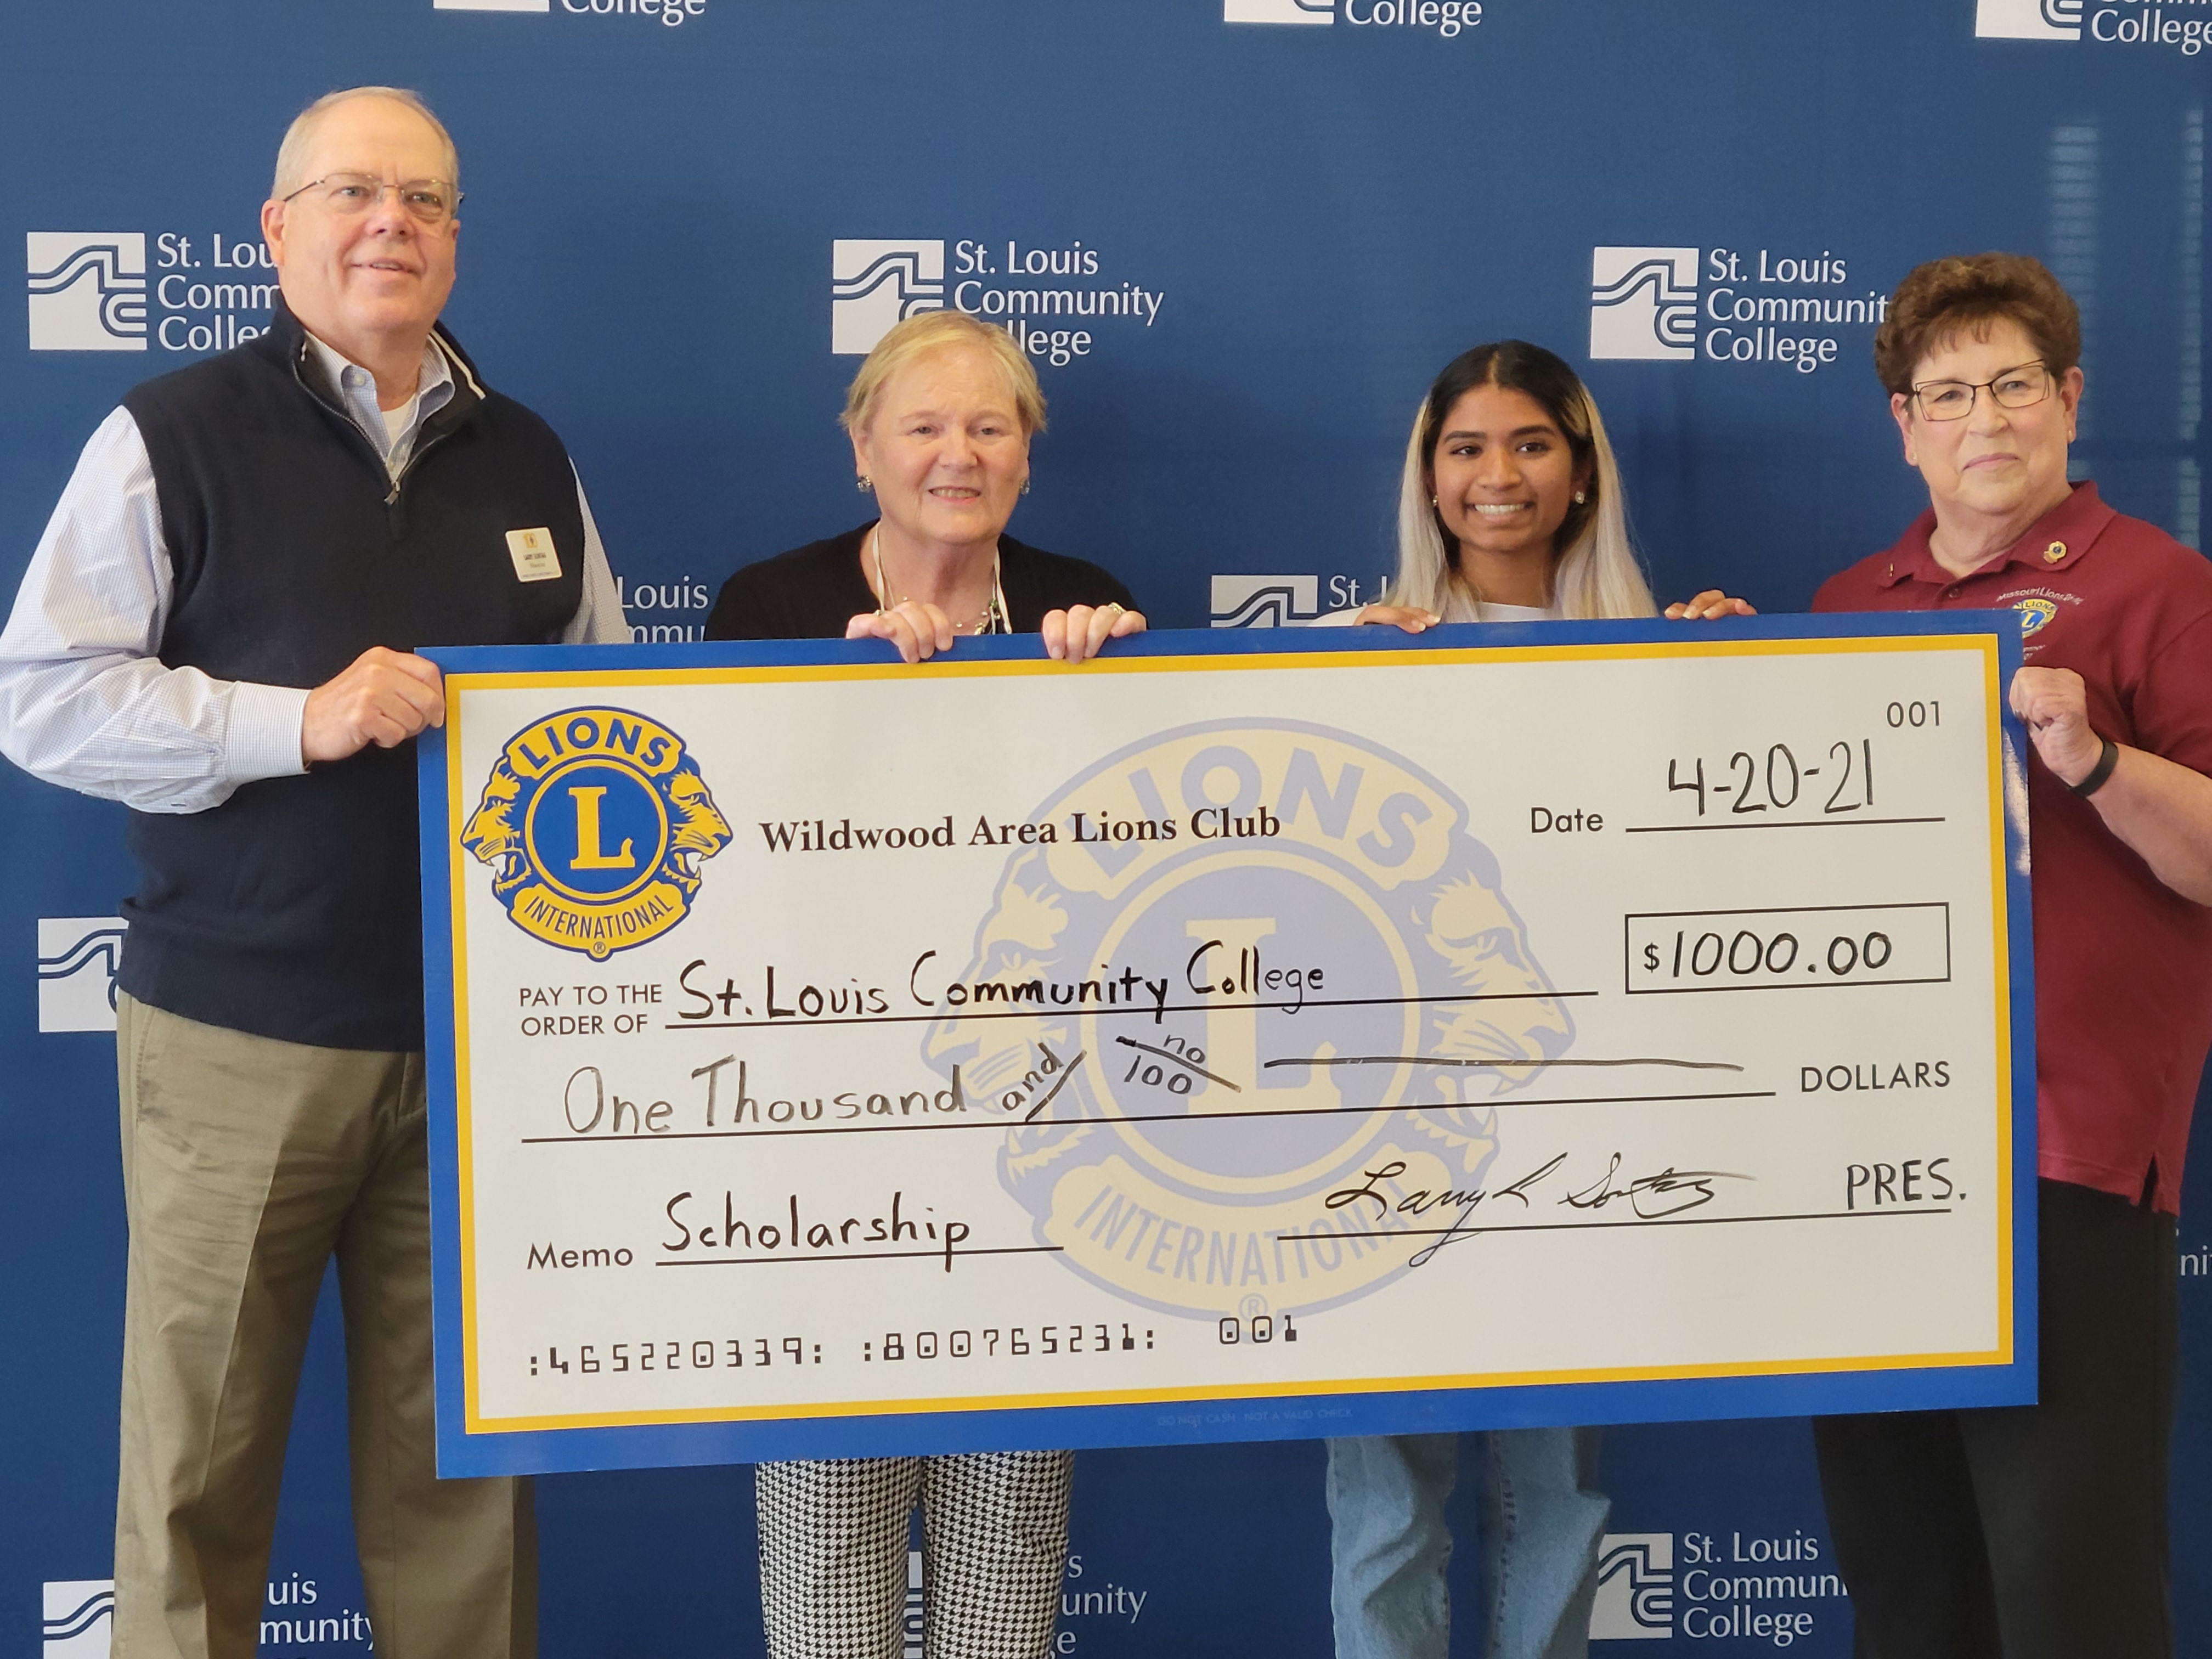 Wildwood Area Lions Club scholarship presentation